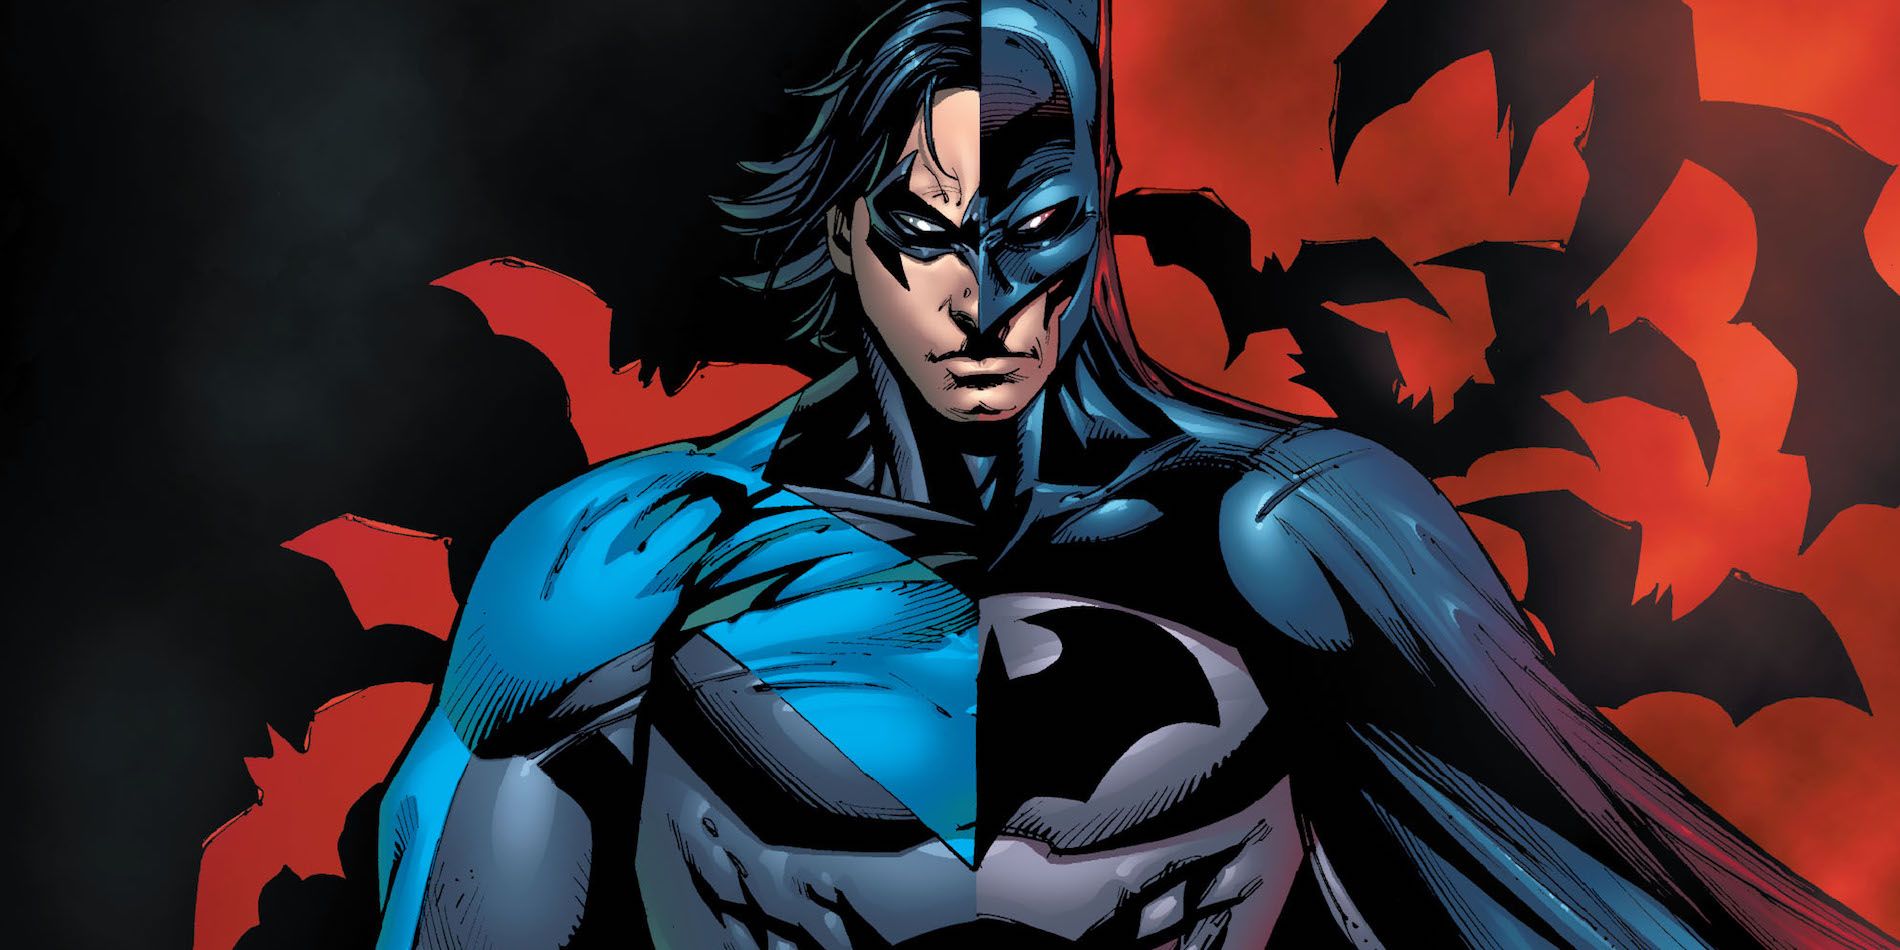 Dick Grayson as Batman in DC Comics